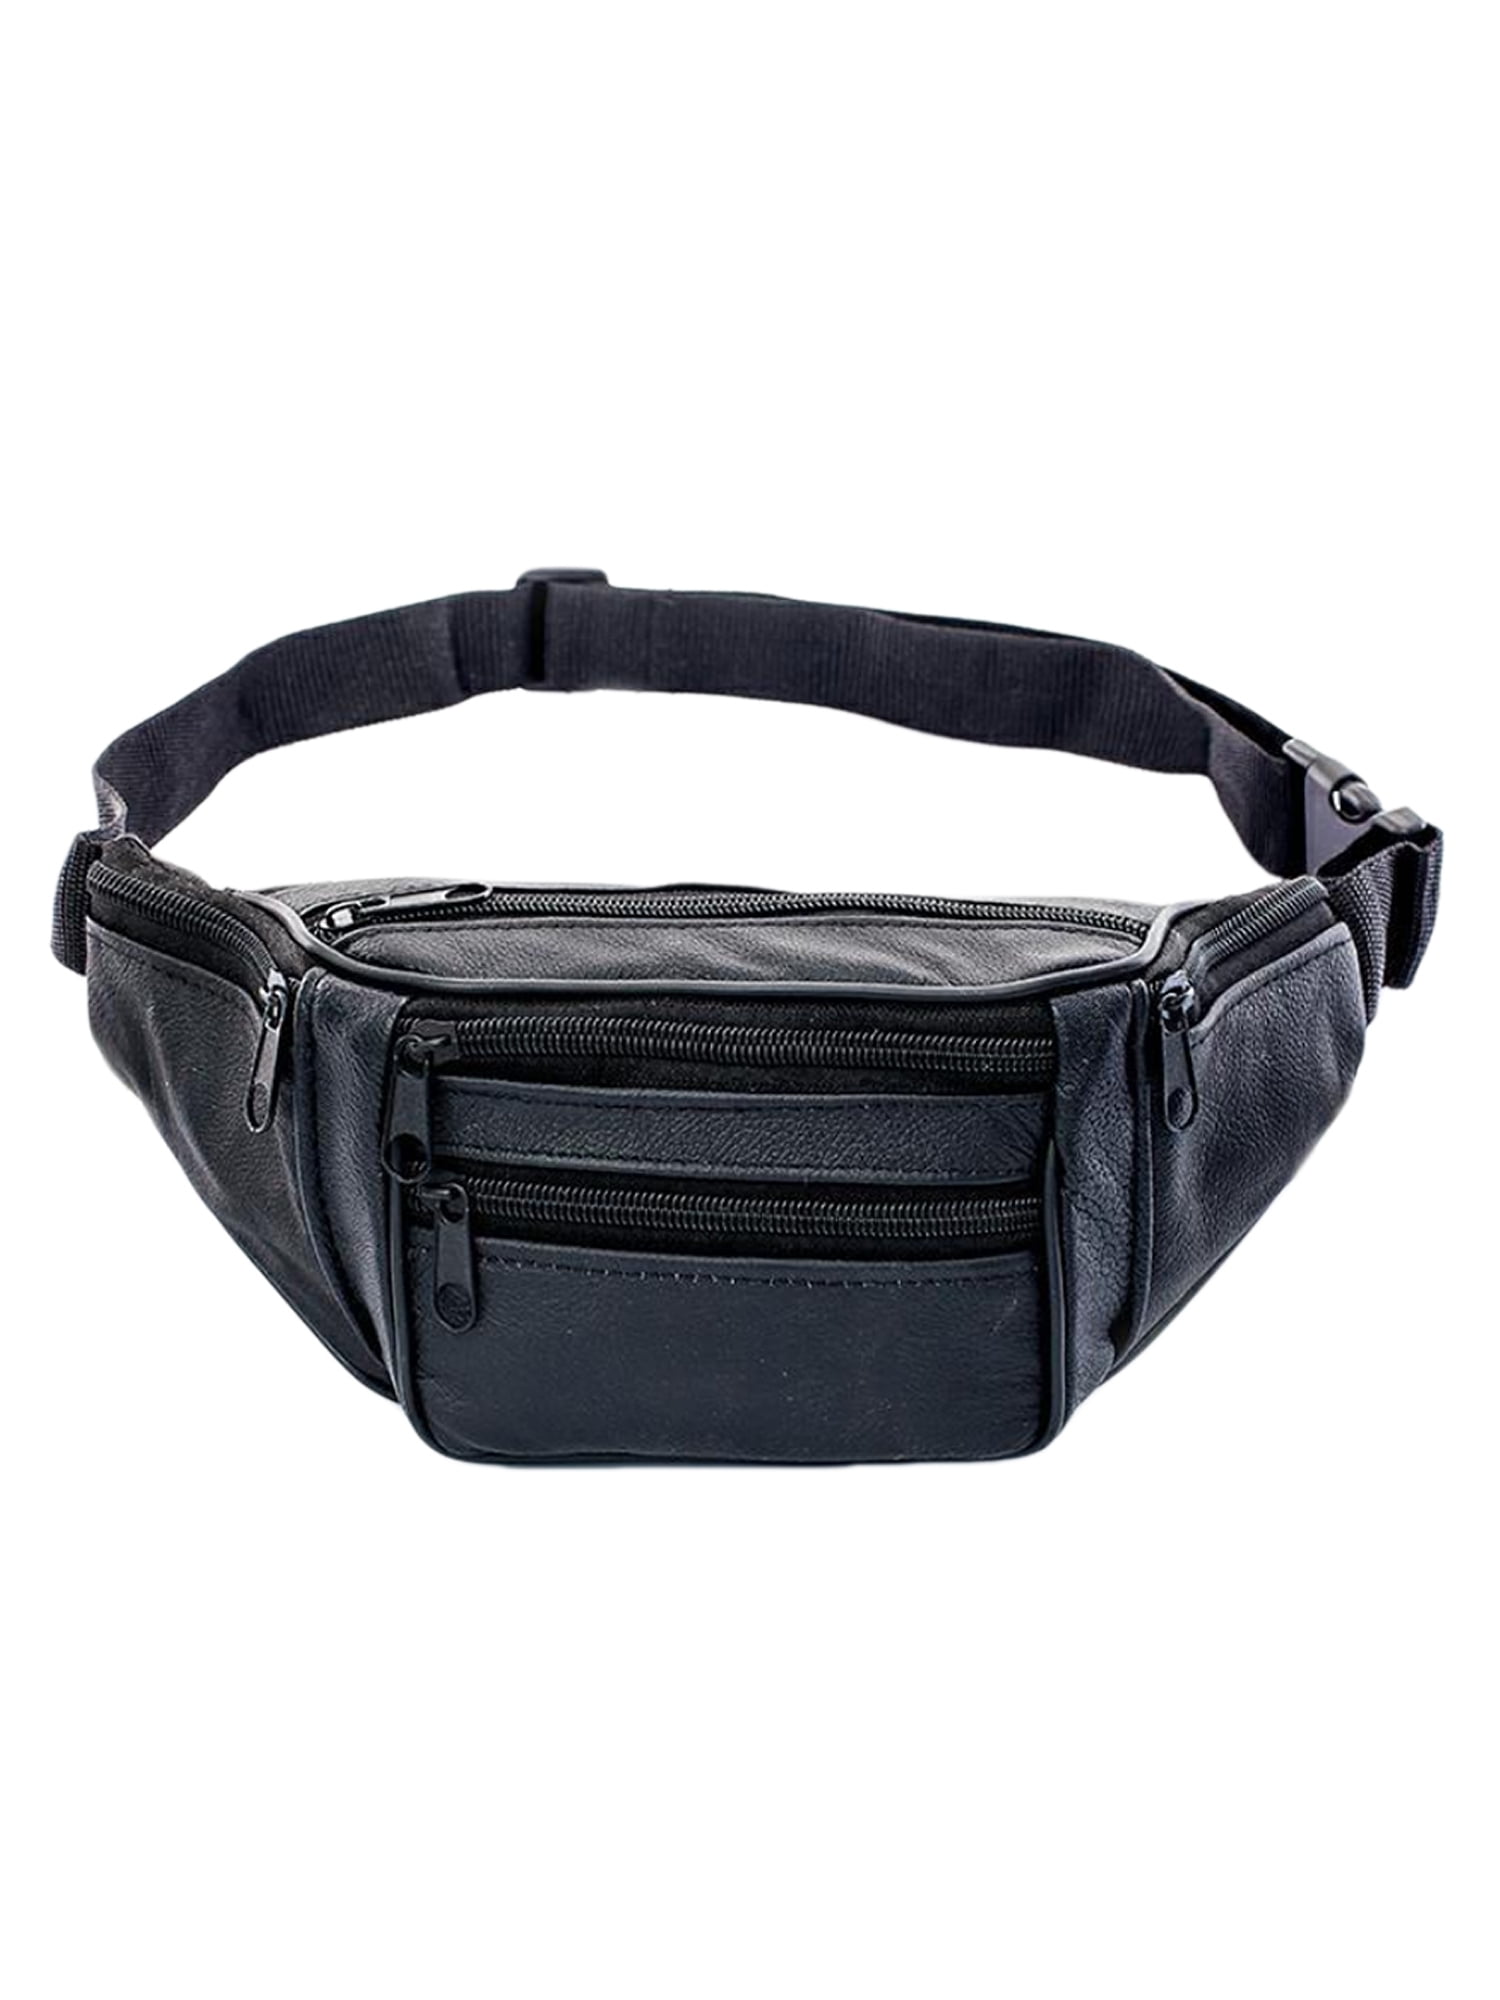 Men's Women Waist Fanny Pack Belt Bag Waterproof Leather Outdoor Sport Small 